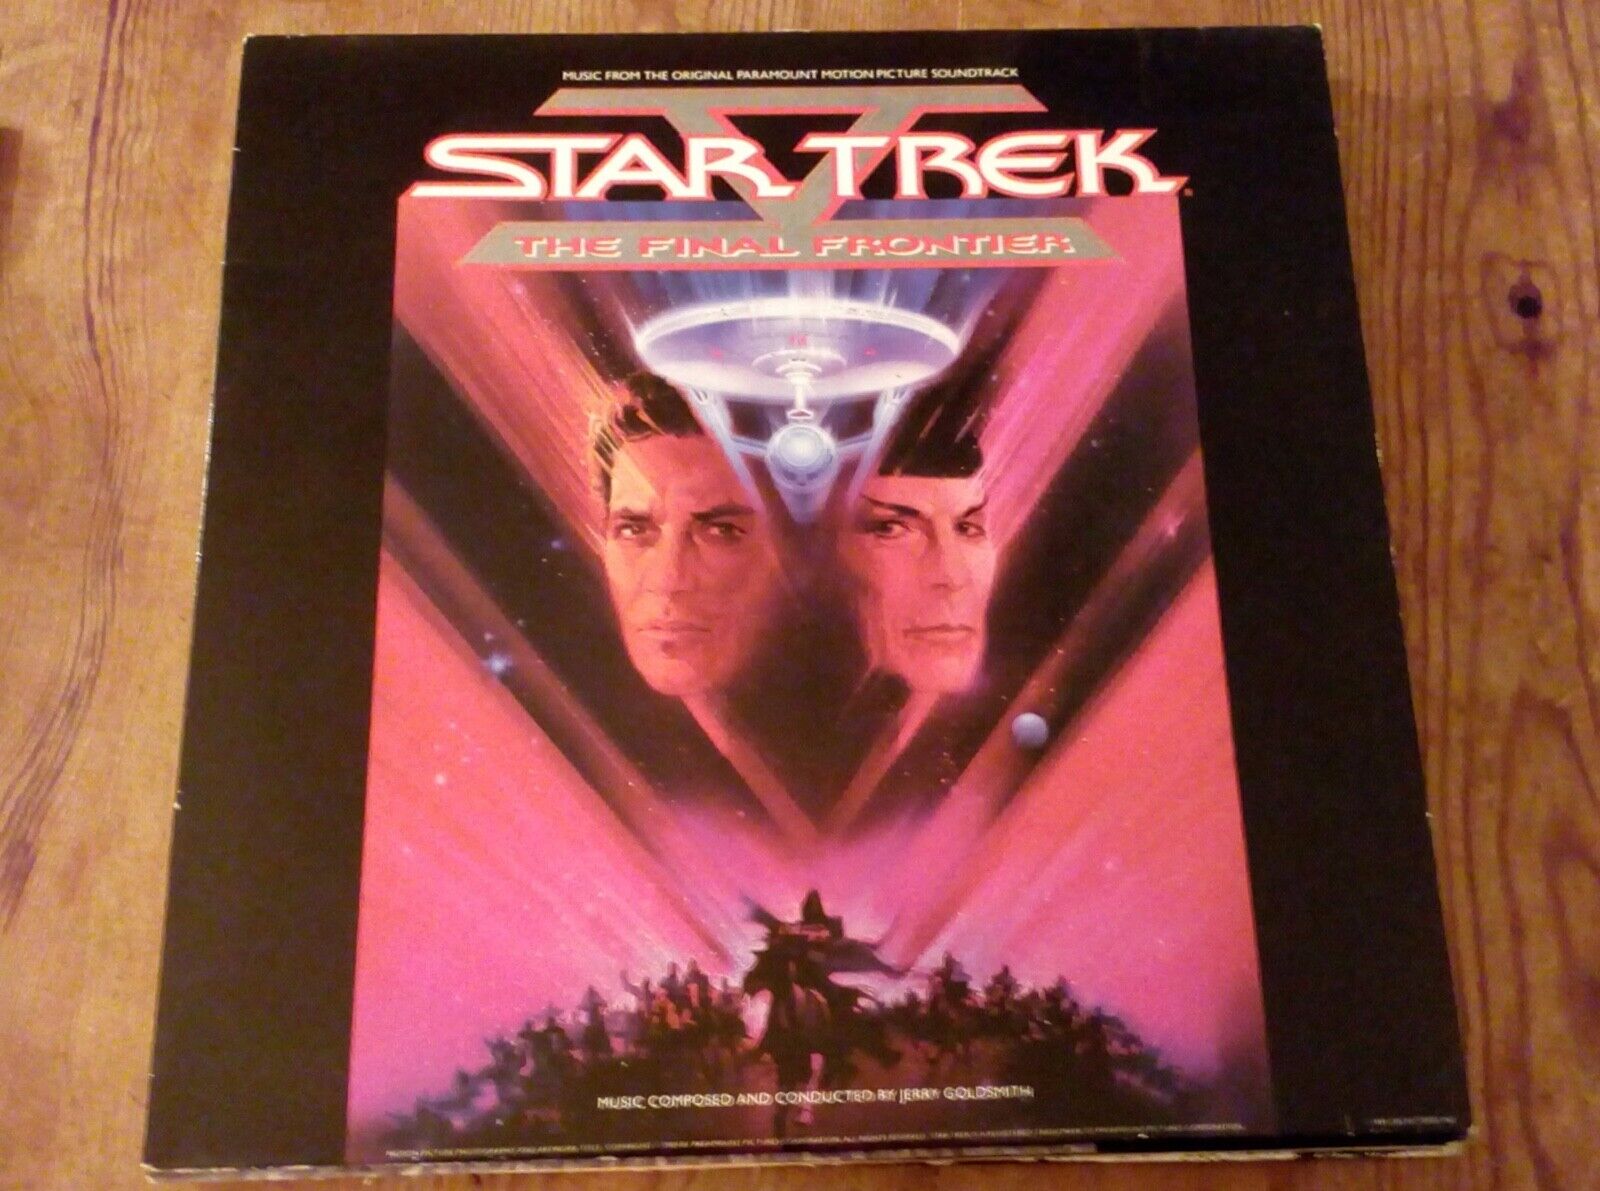 Vinyl Record, Album, Star Trek 5: The Final Frontier Soundtrack, Promo, Demo LP